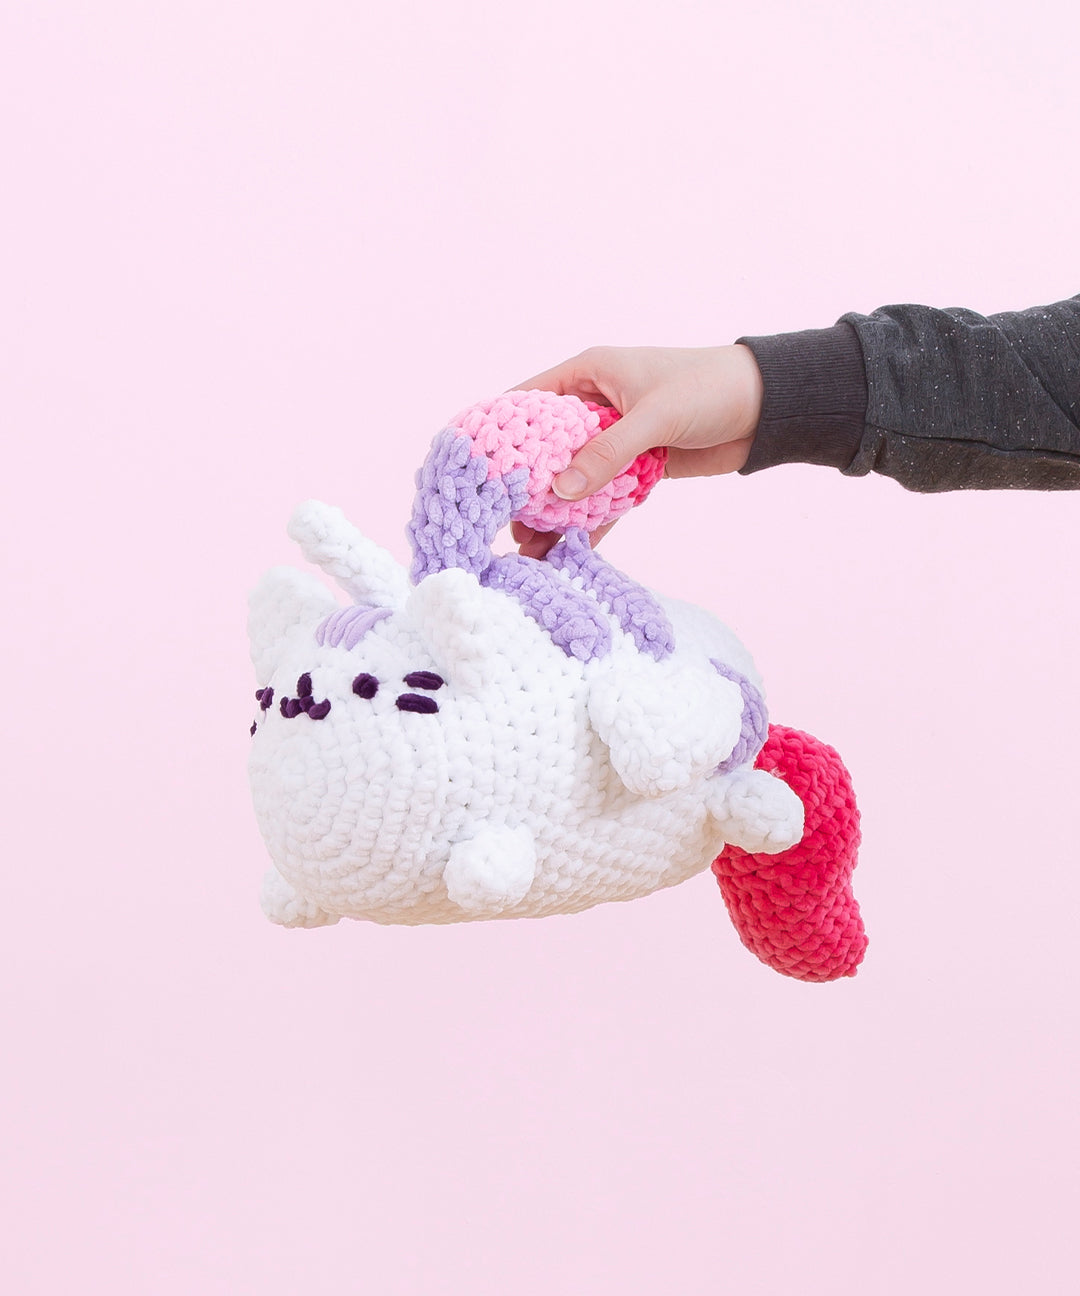 Small Crochet Animals as Keychains -  Ireland